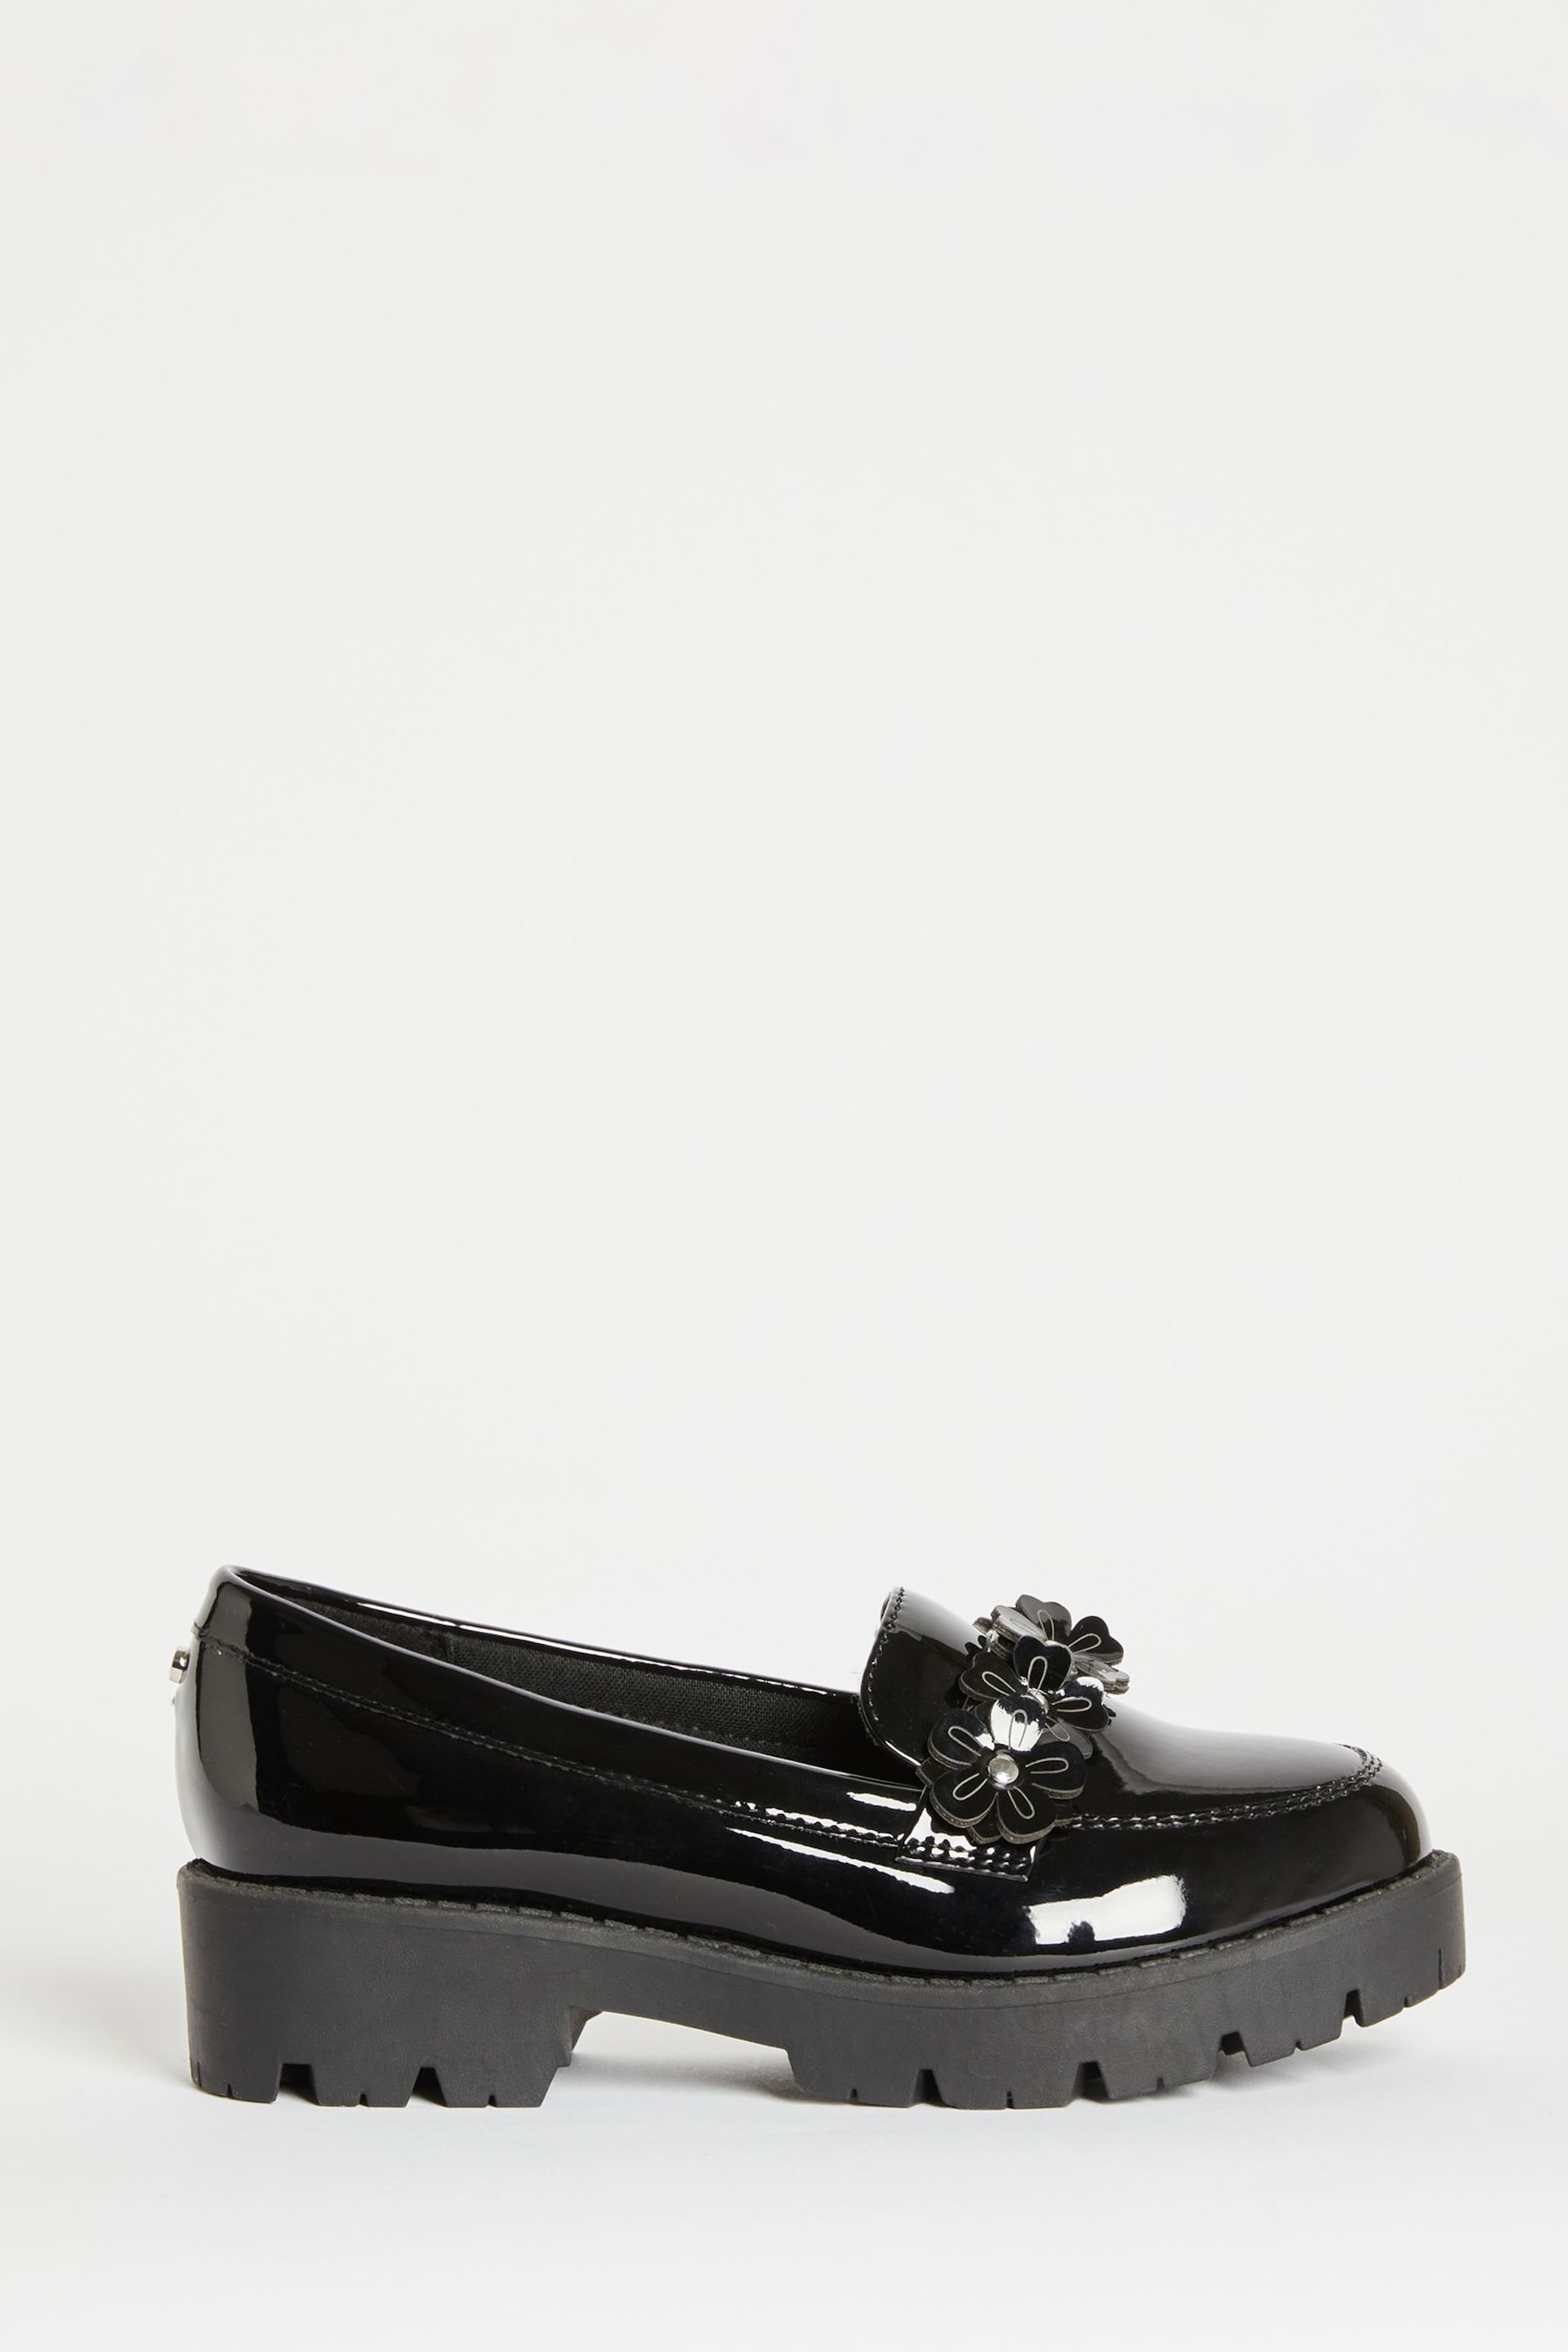 Lipsy Black Flower Slip On Loafer School Shoe - Image 4 of 7